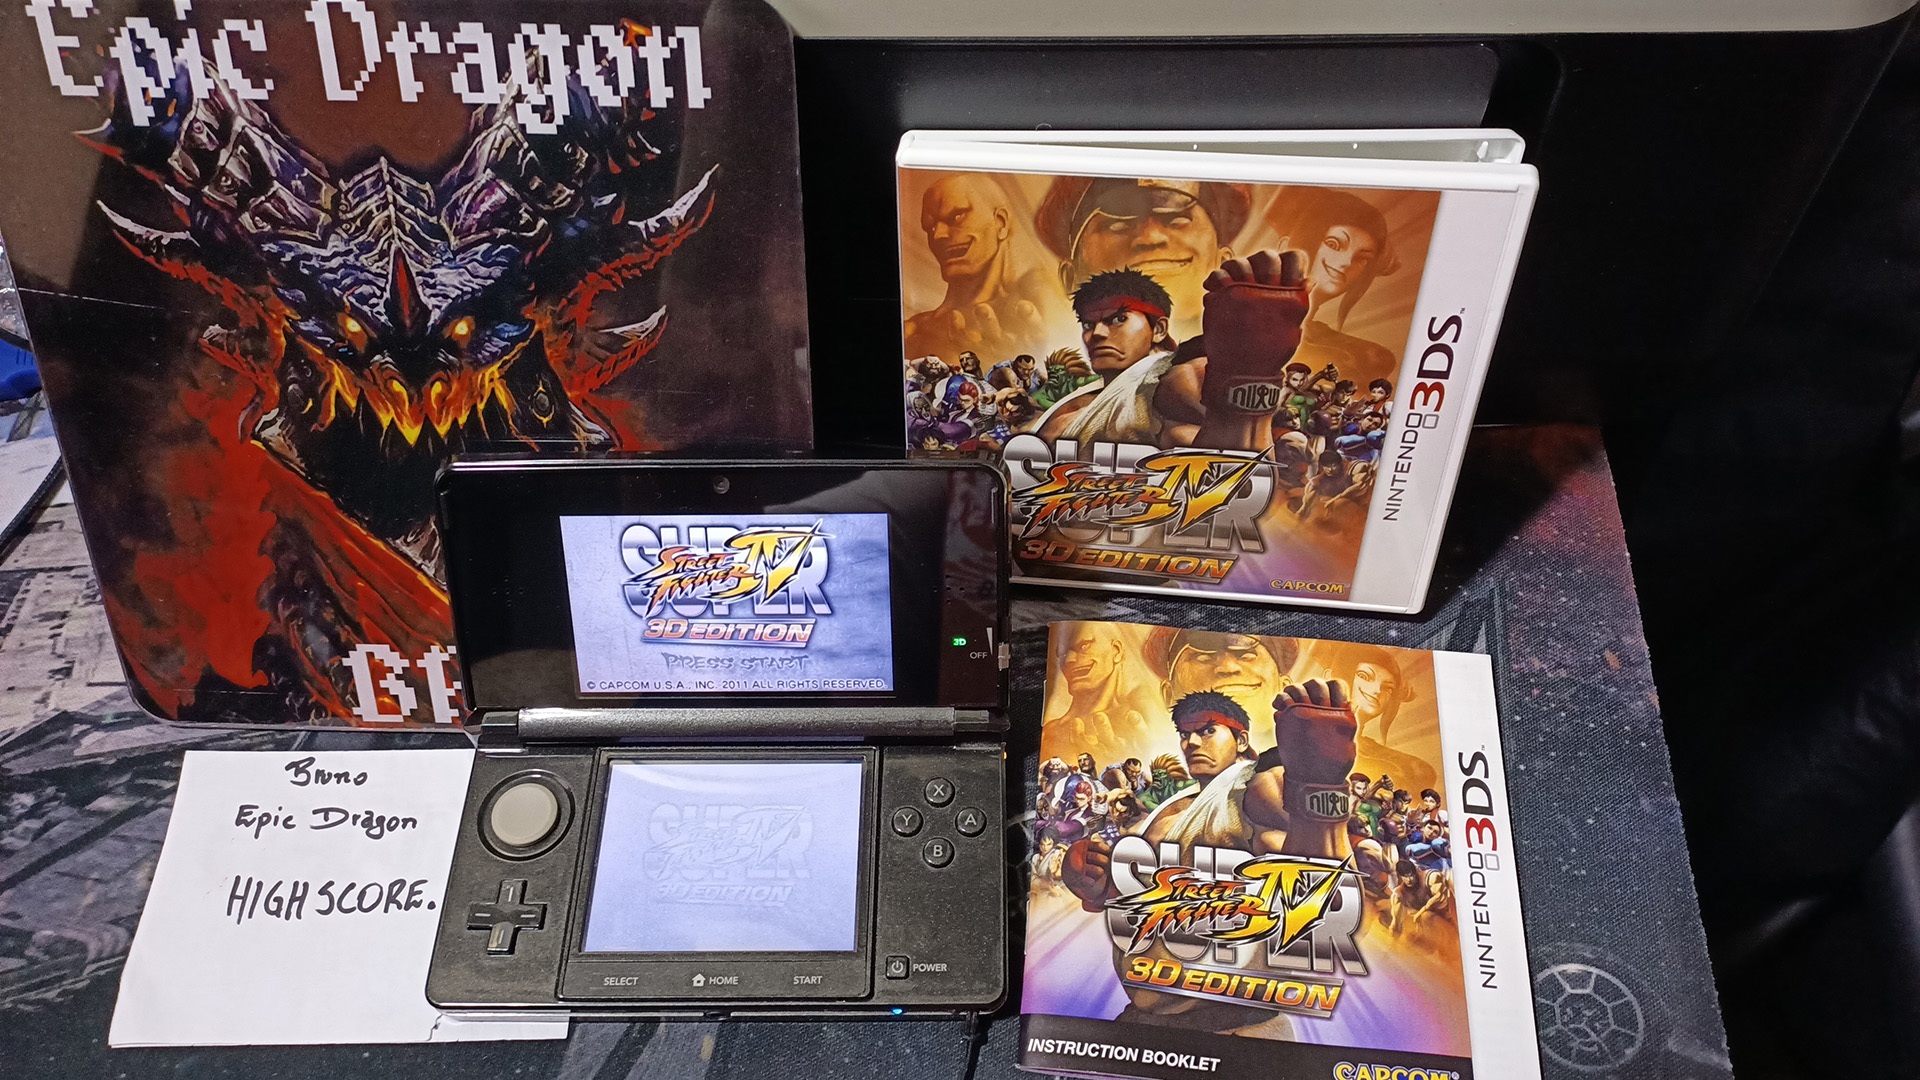 EpicDragon: Super Street Fighter IV 3D Edition: Arcade: Ibuki (Nintendo 3DS) 471,500 points on 2022-07-29 16:29:15